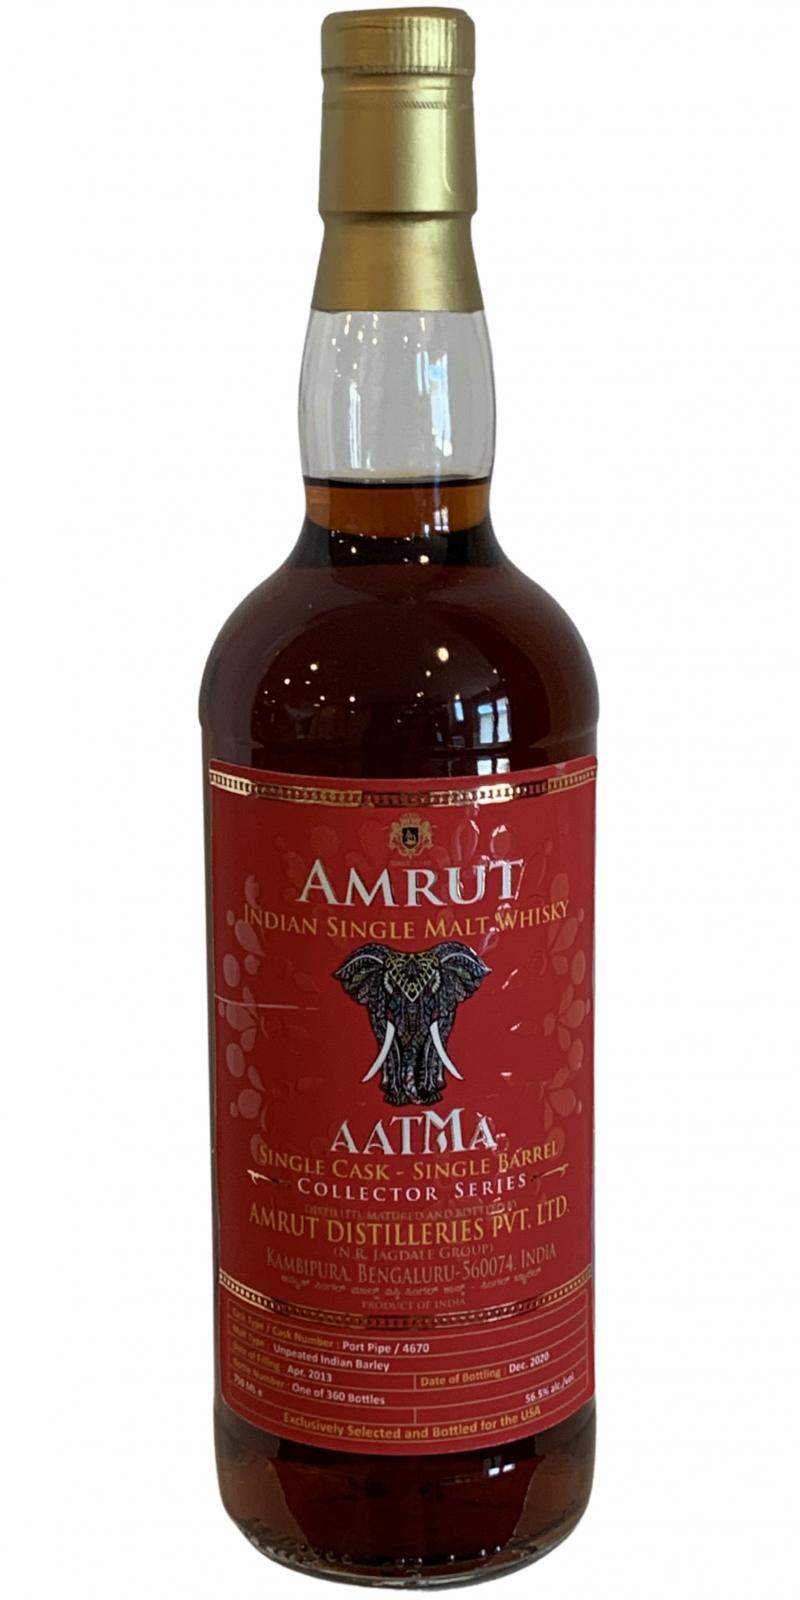 Amrut 2013 Aatma 5 Collector Series Port Pipe #4670 56.5% 750ml